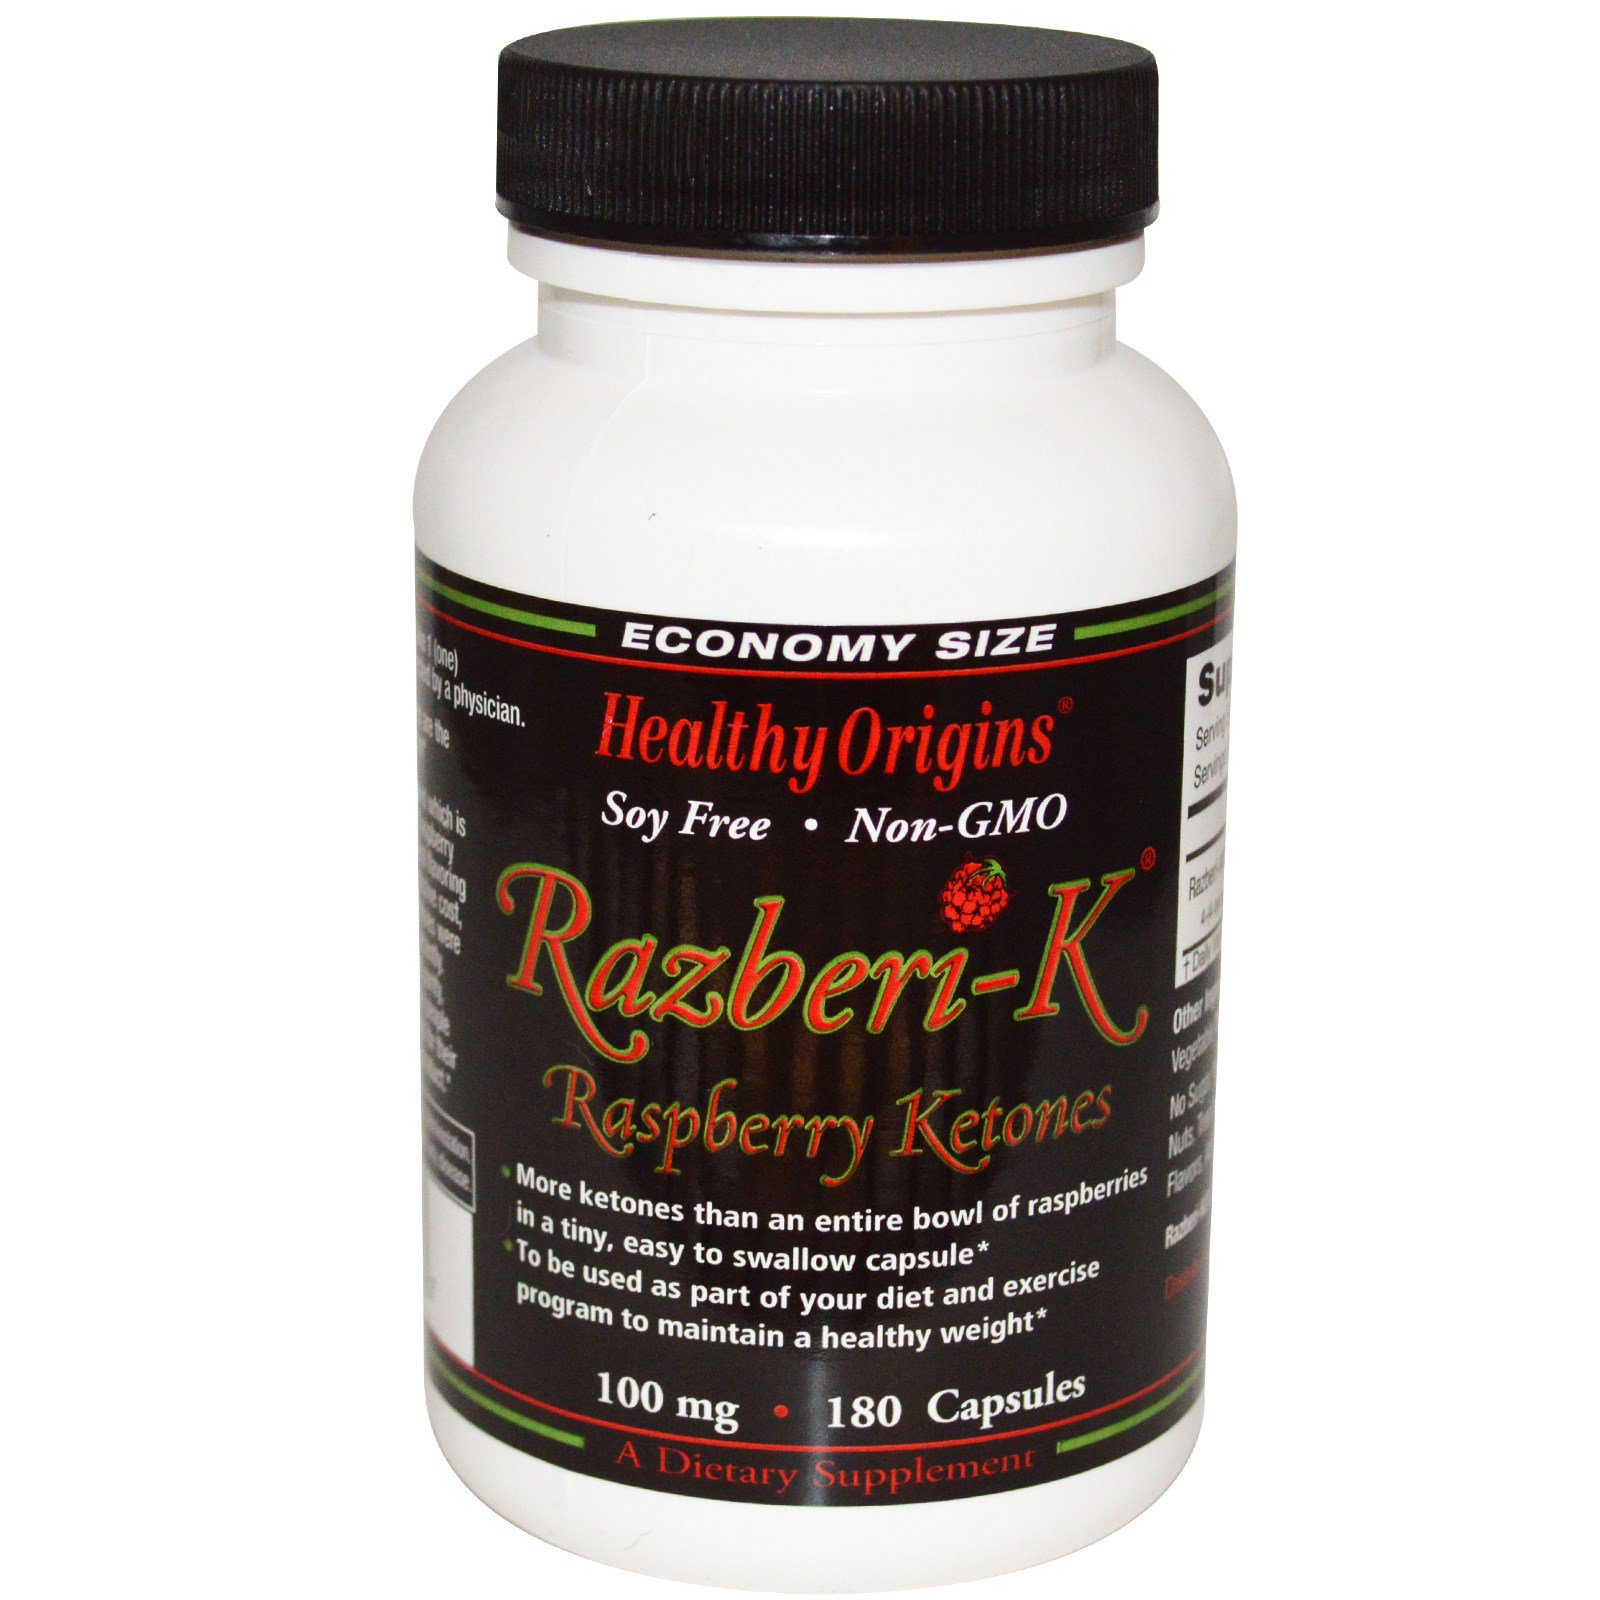 Healthy Origins, Razberi-K, малиновые кетоны, 100 мг, 180 капсул